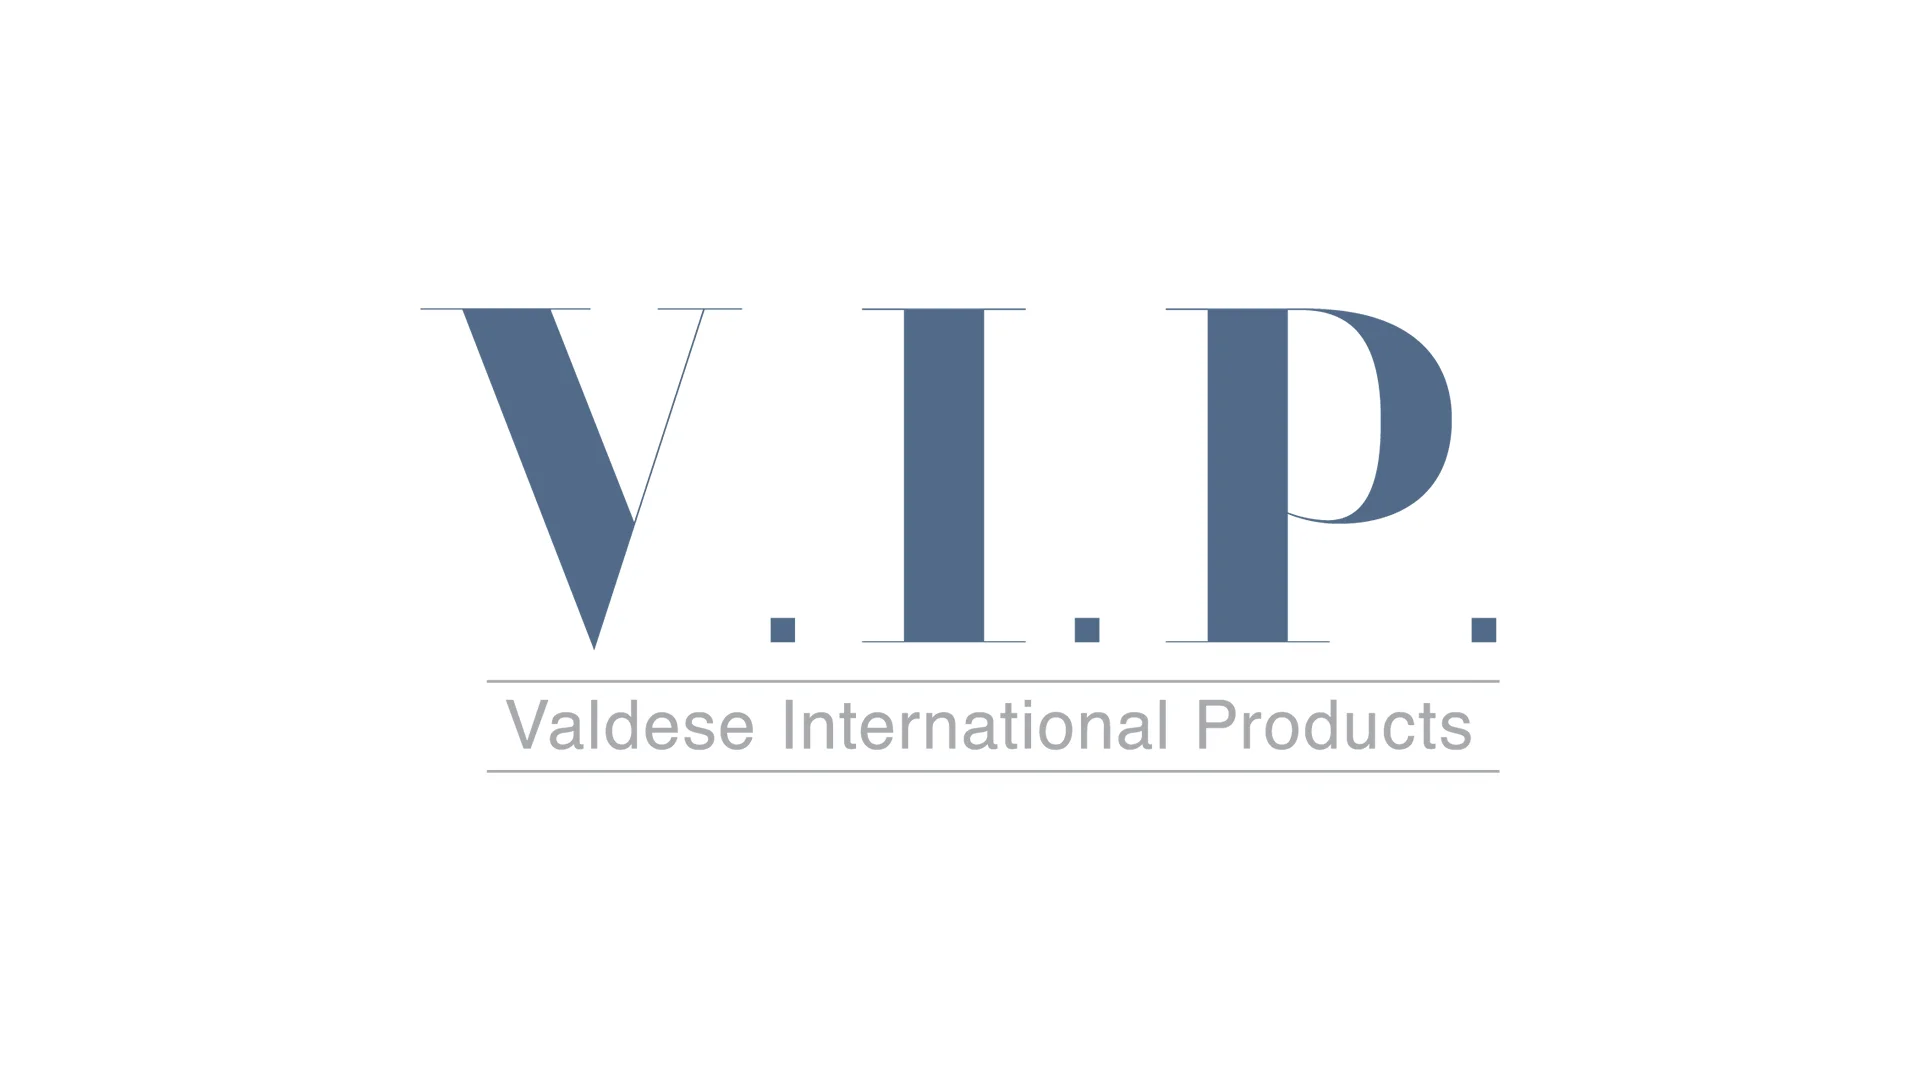 Valdese International Products